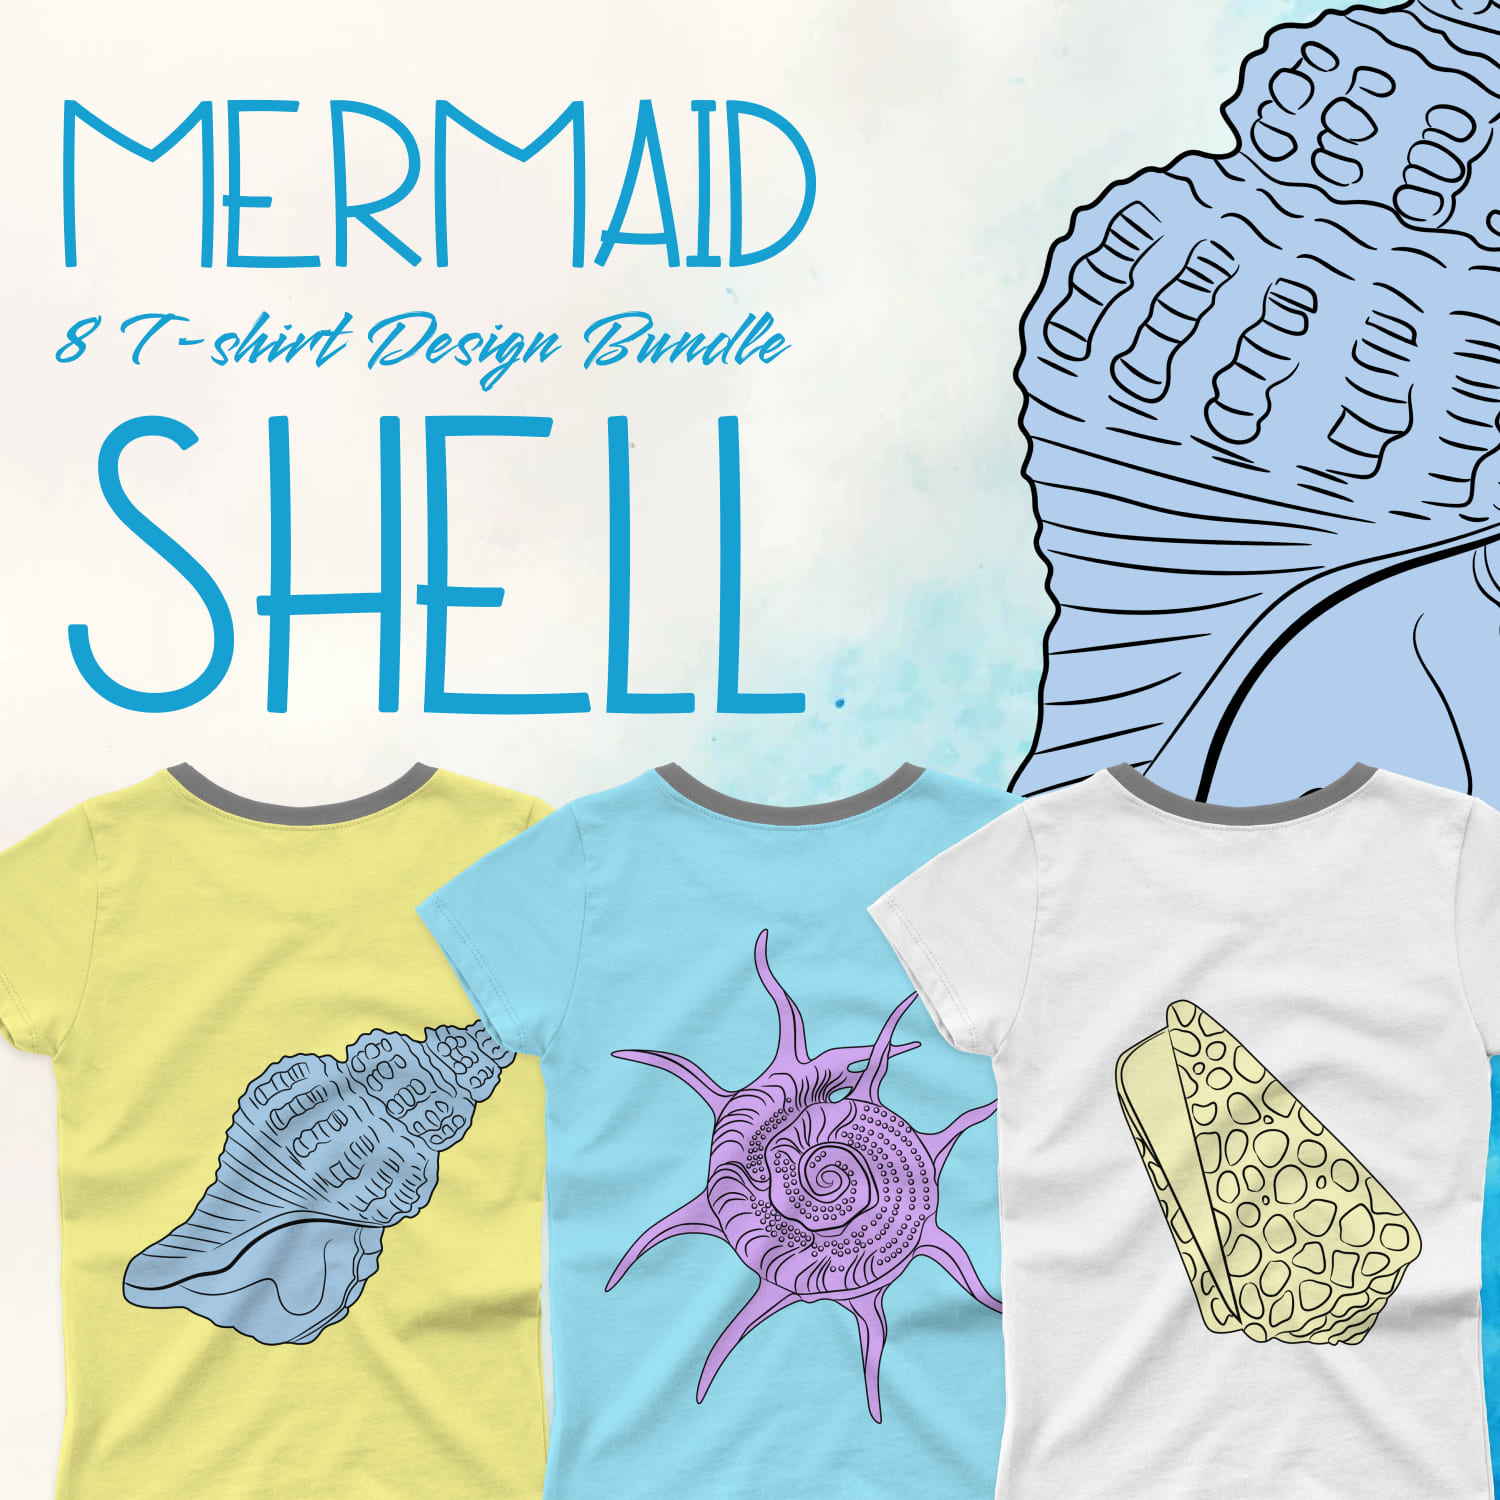 Illustration mermaid shell on images.